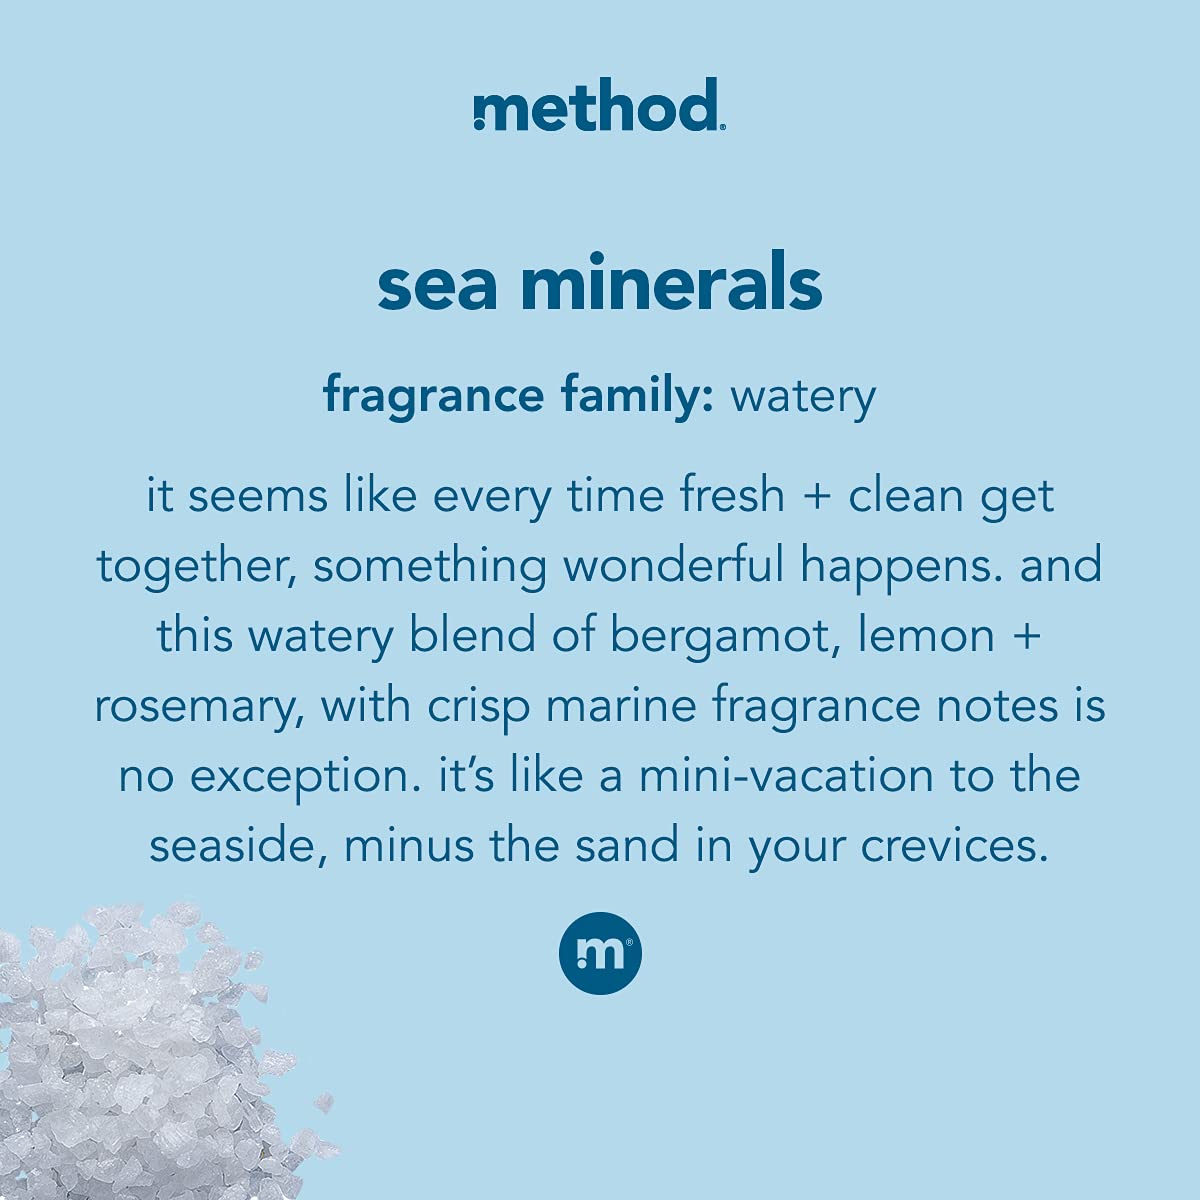 Method Products Method Gel Hand Soap Refill, Sea Minerals, Biodegradable Formula, 34 Fl Oz (Pack of 1)